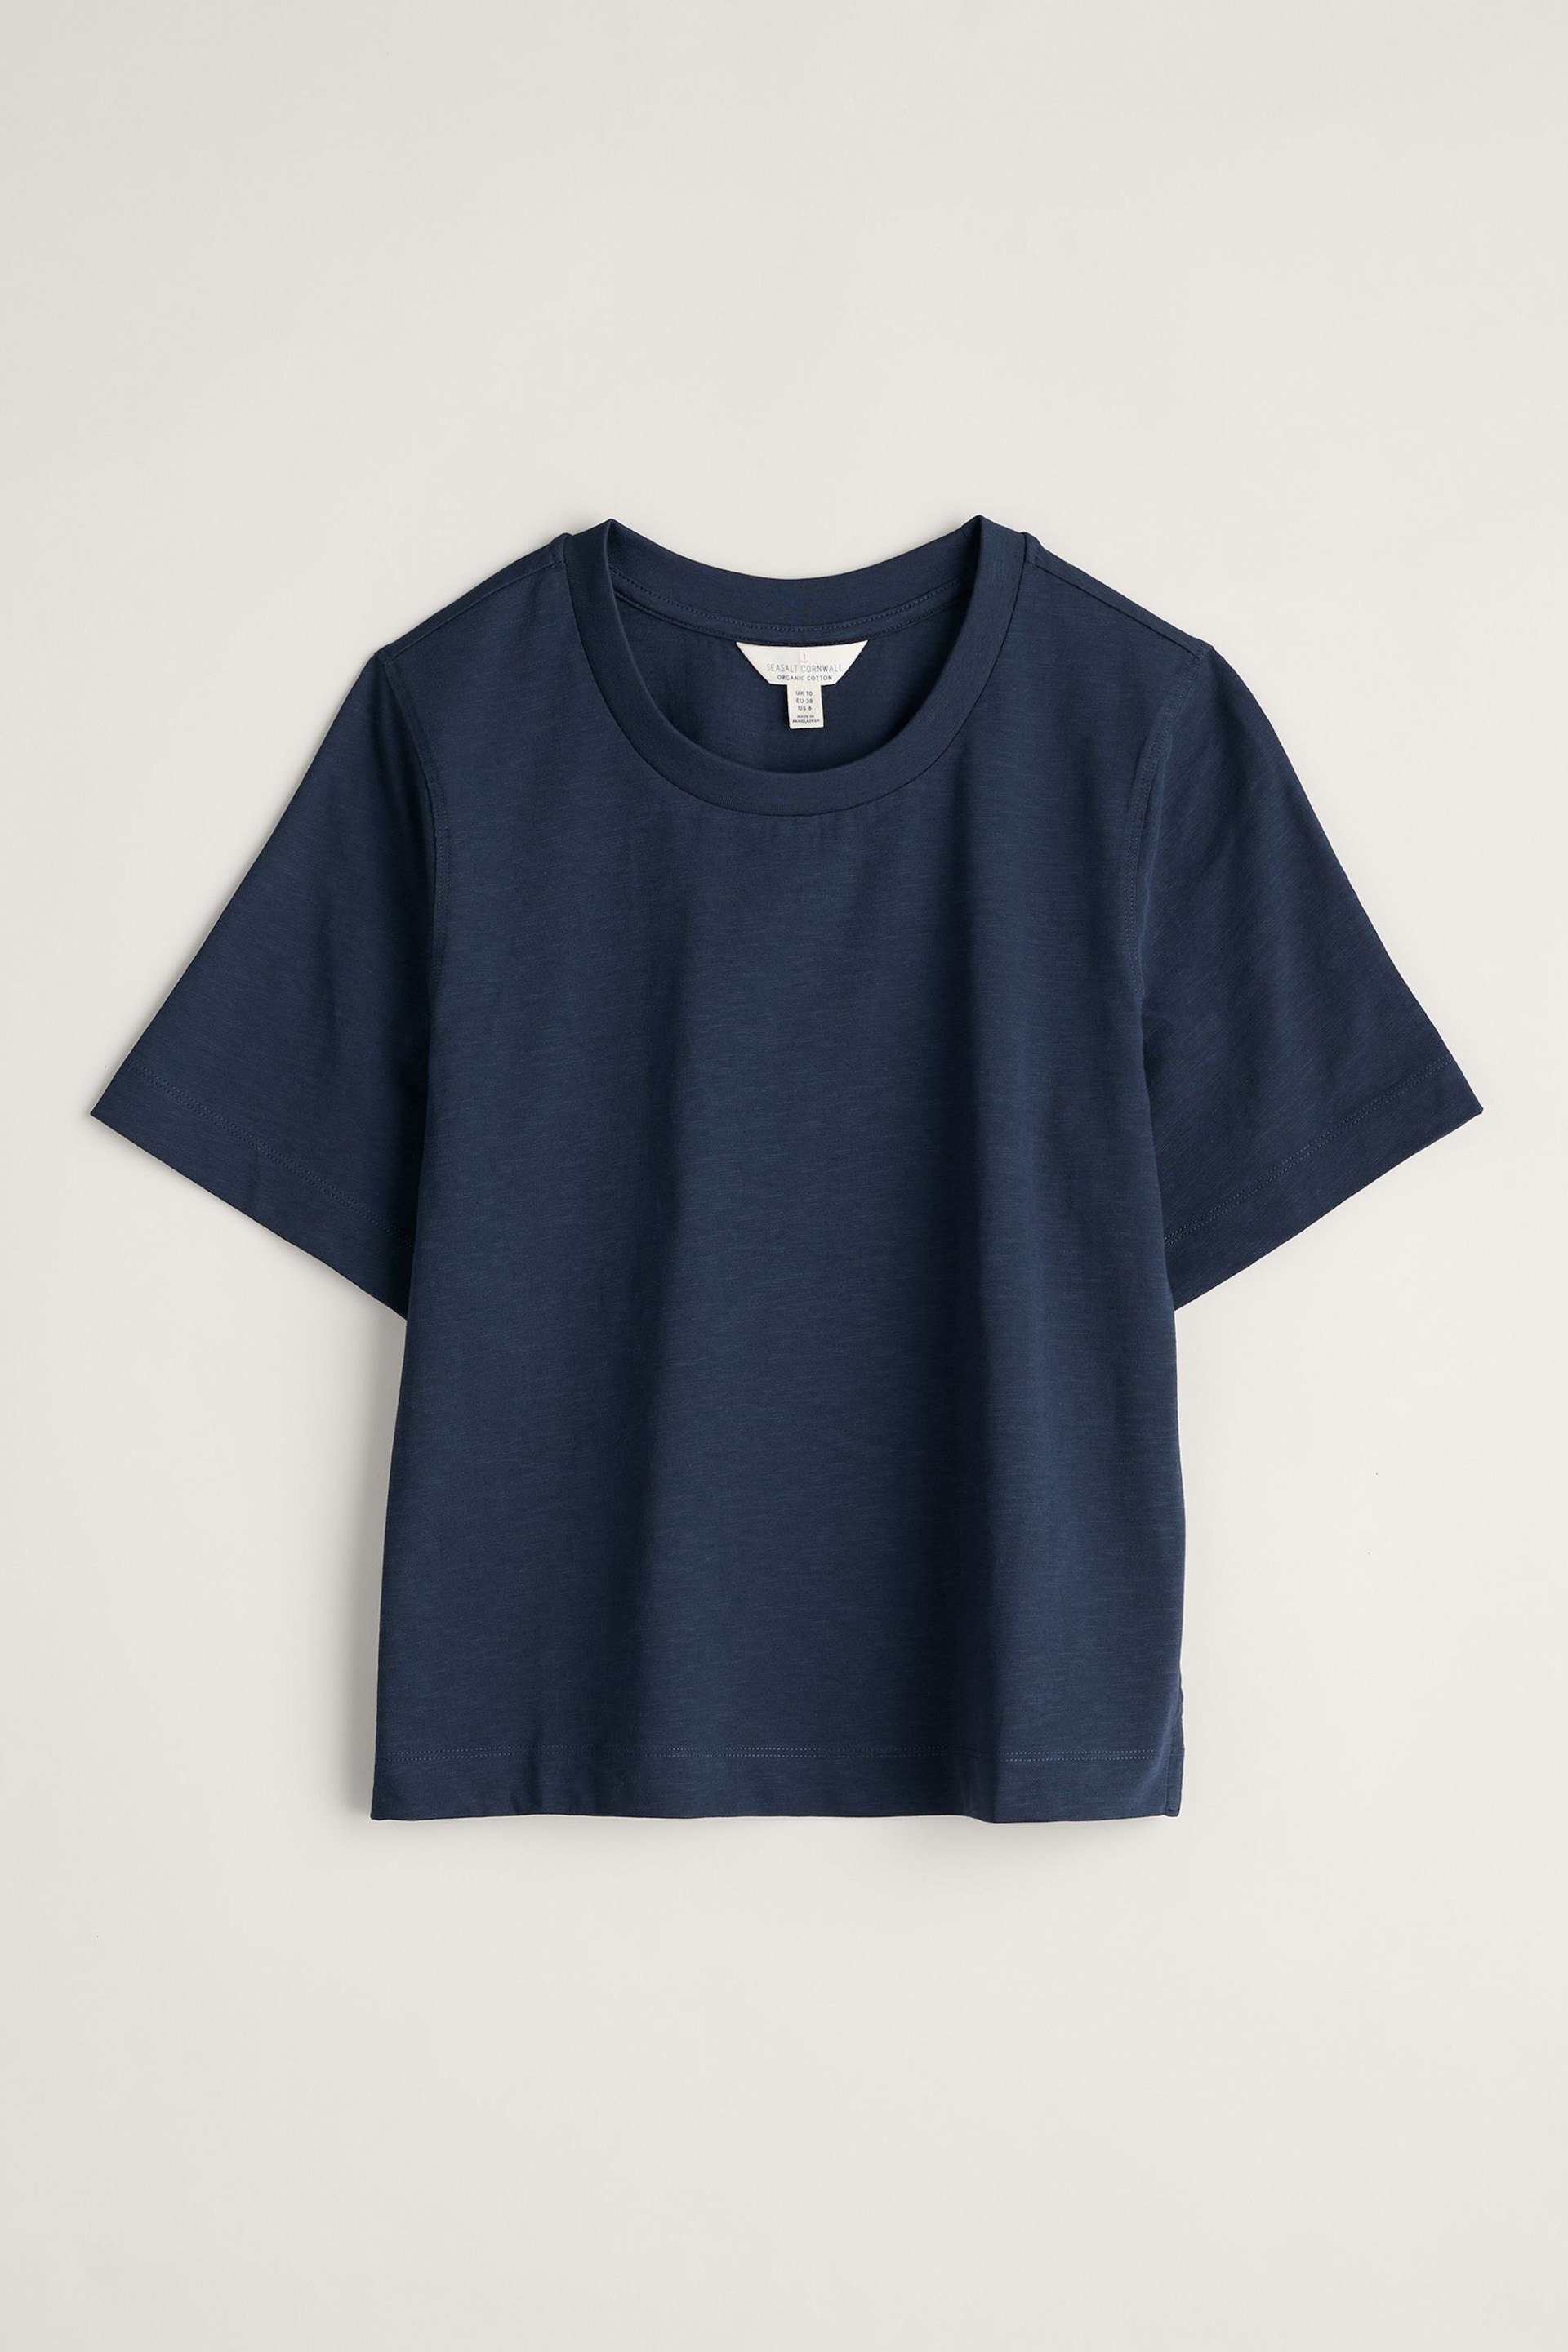 Seasalt Cornwall Blue Copseland T-Shirt - Image 4 of 5